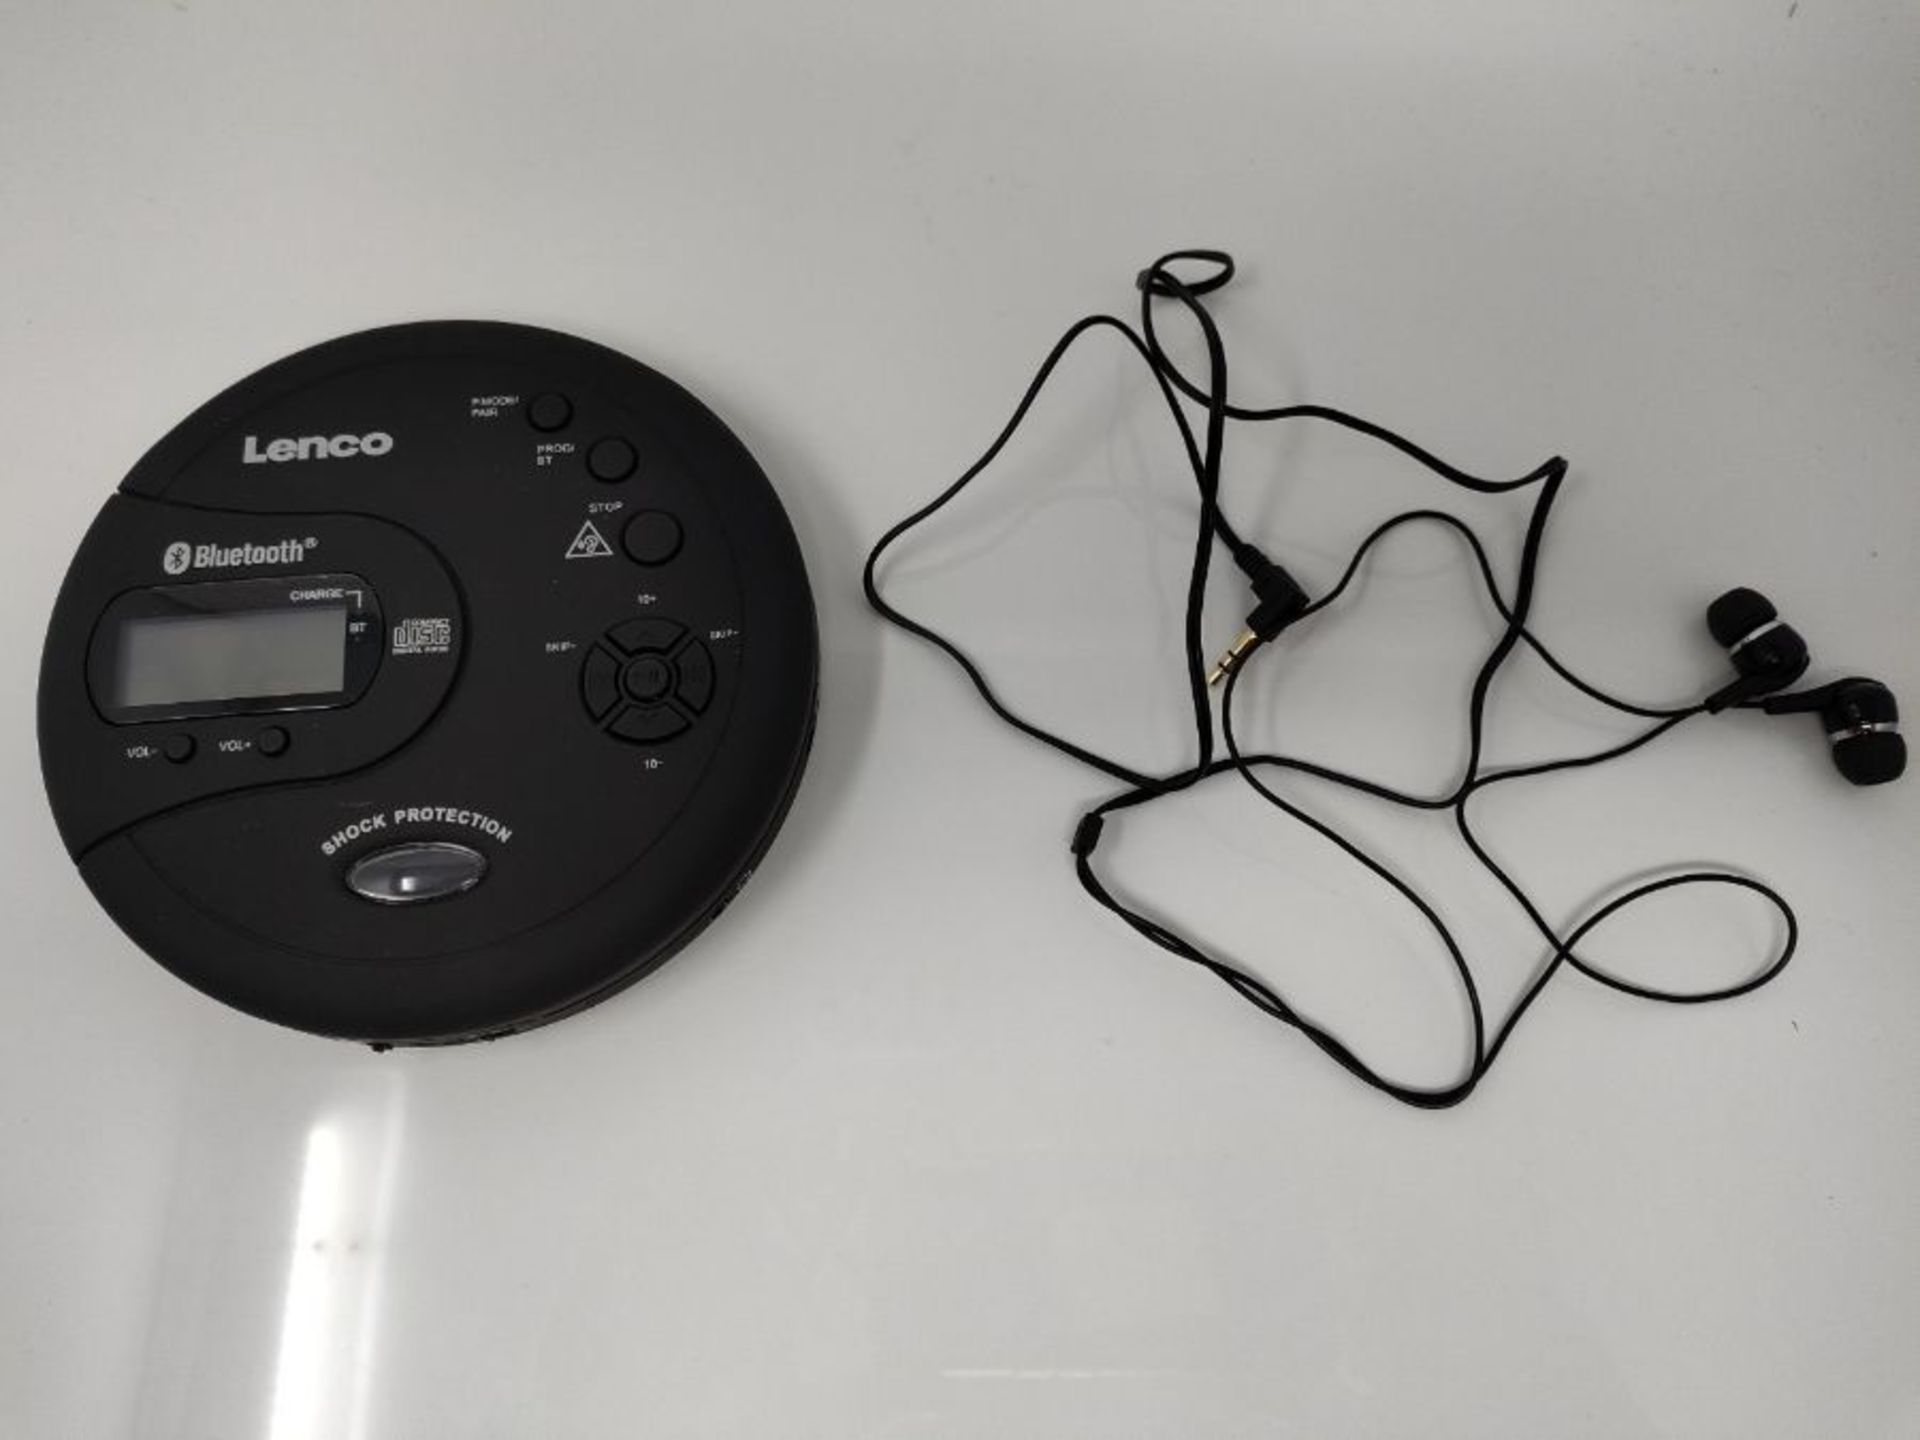 RRP £59.00 Lenco CD-300 - Portable CD Player Walkman - Bluetooth Diskman - CD Walkman - MP3 Funct - Image 2 of 2